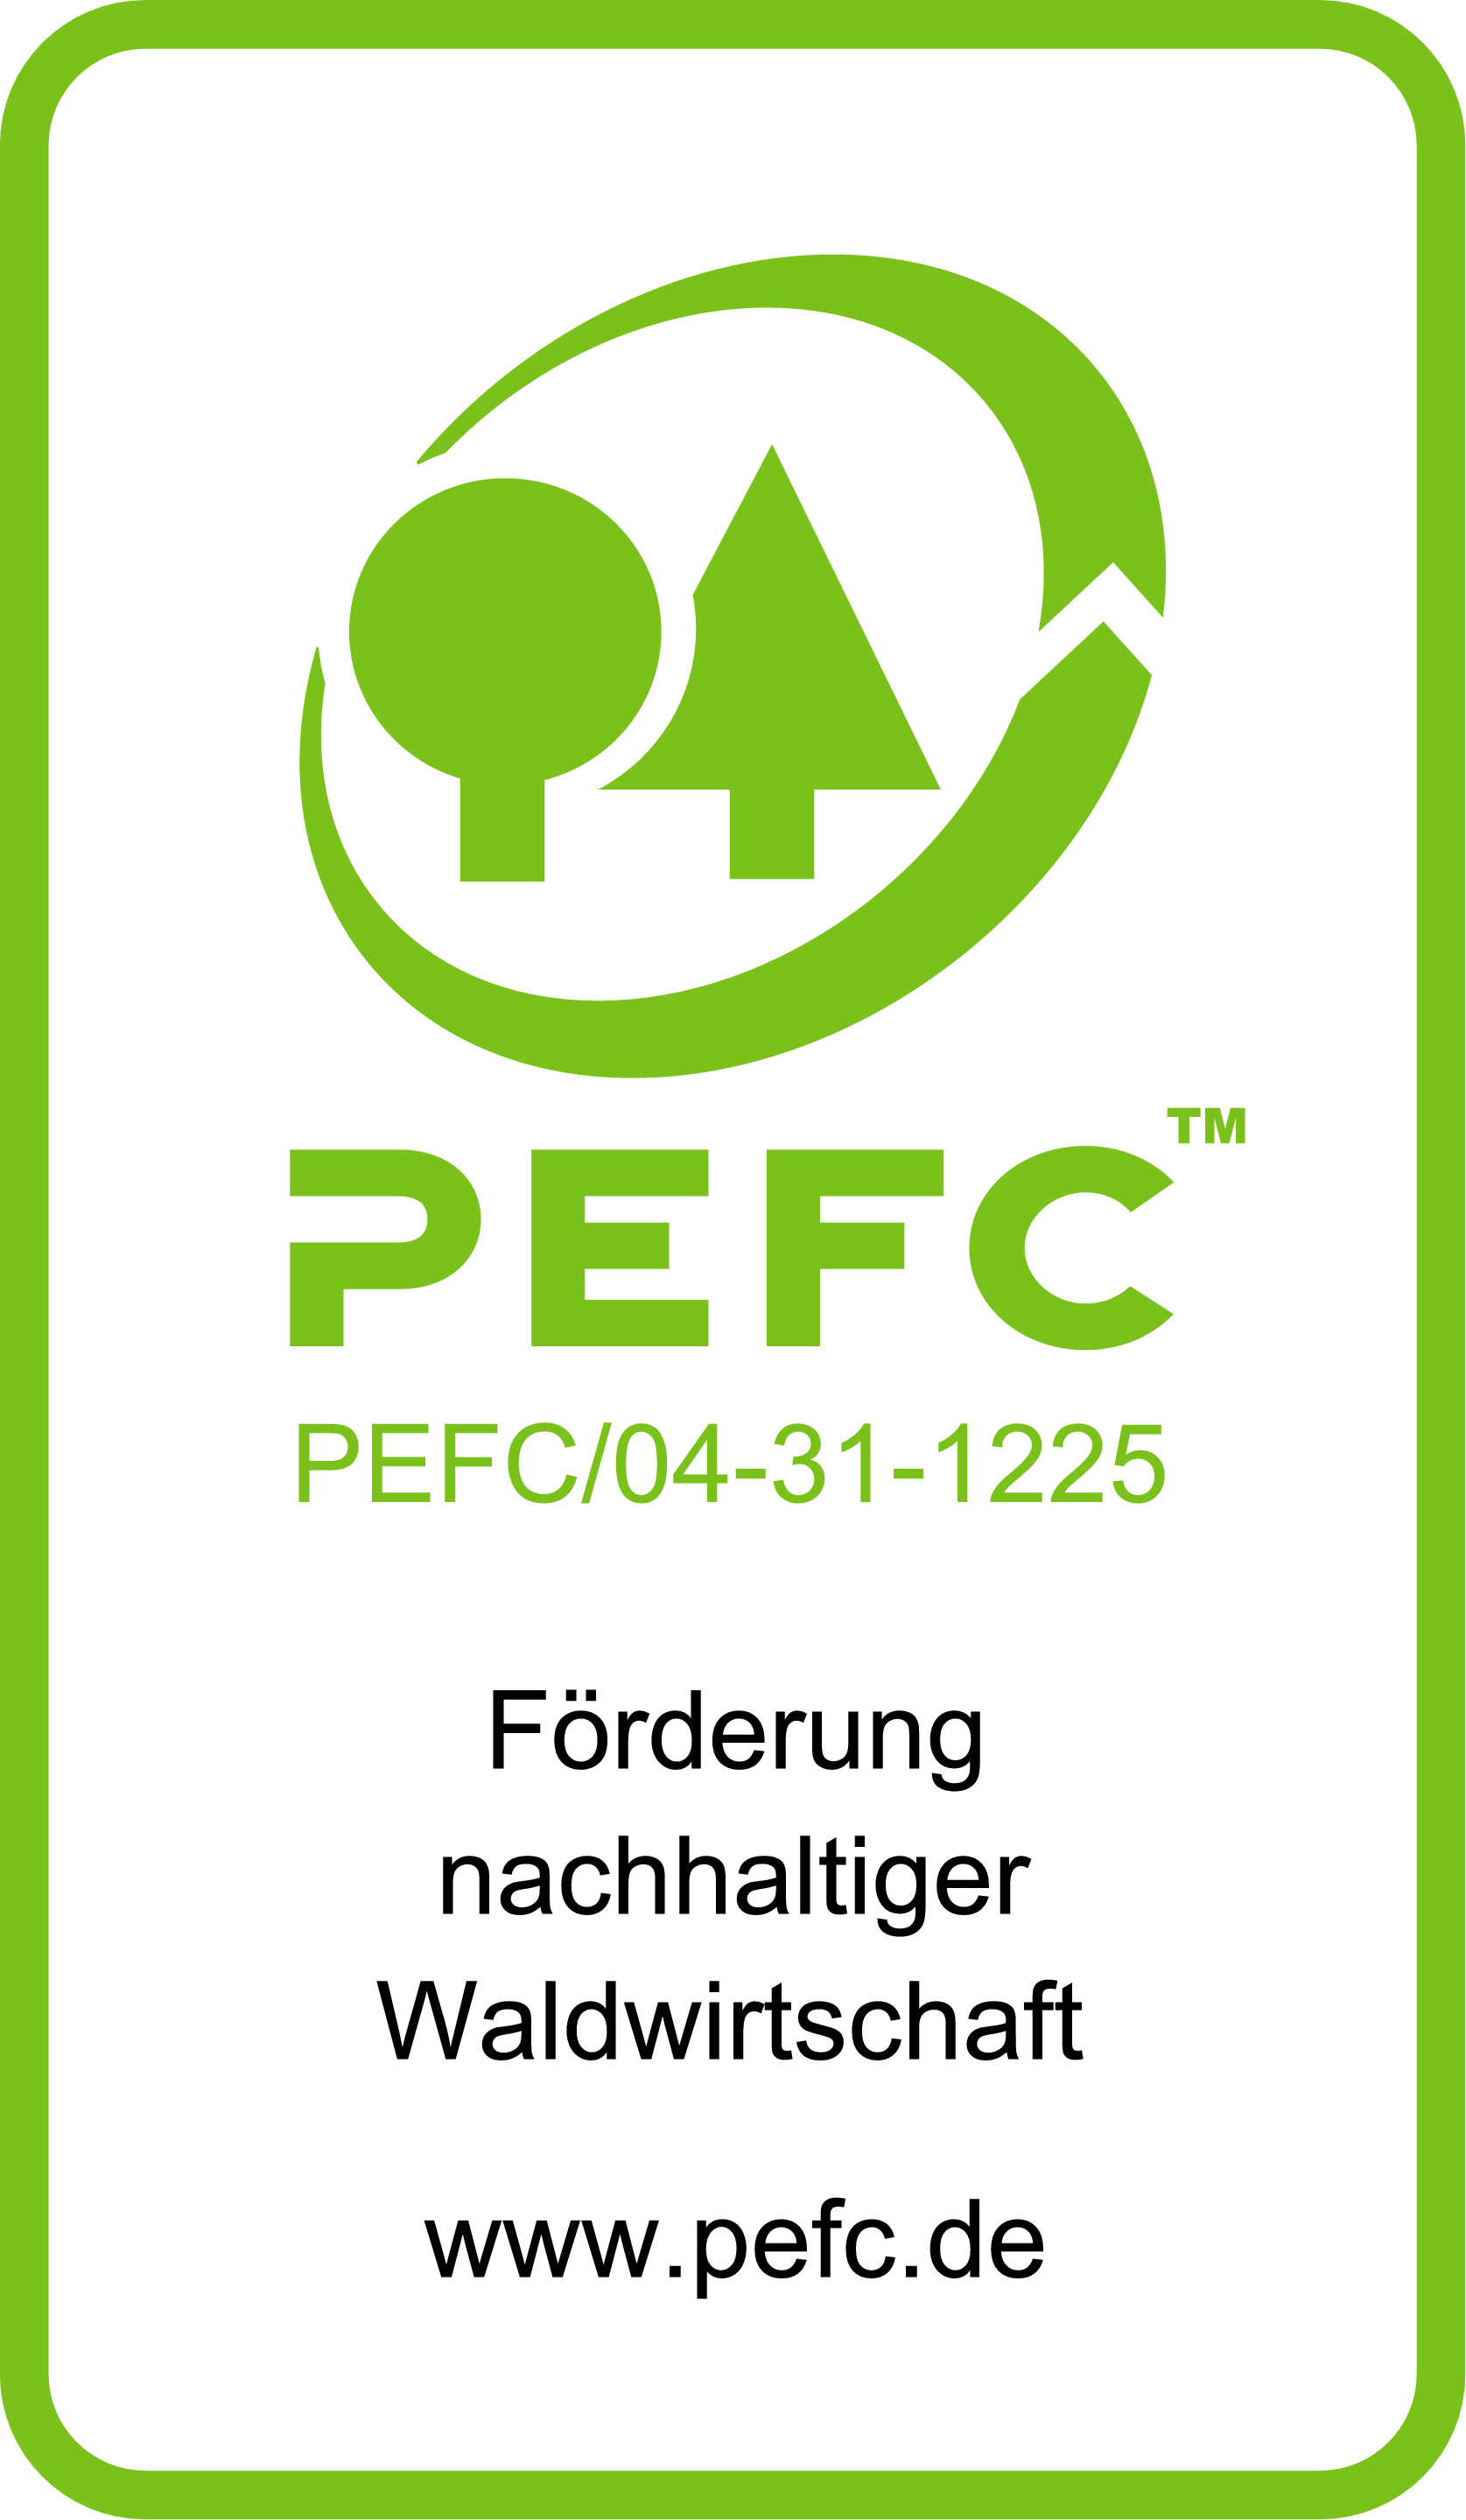 pefc logo 2017 hochkant gruen